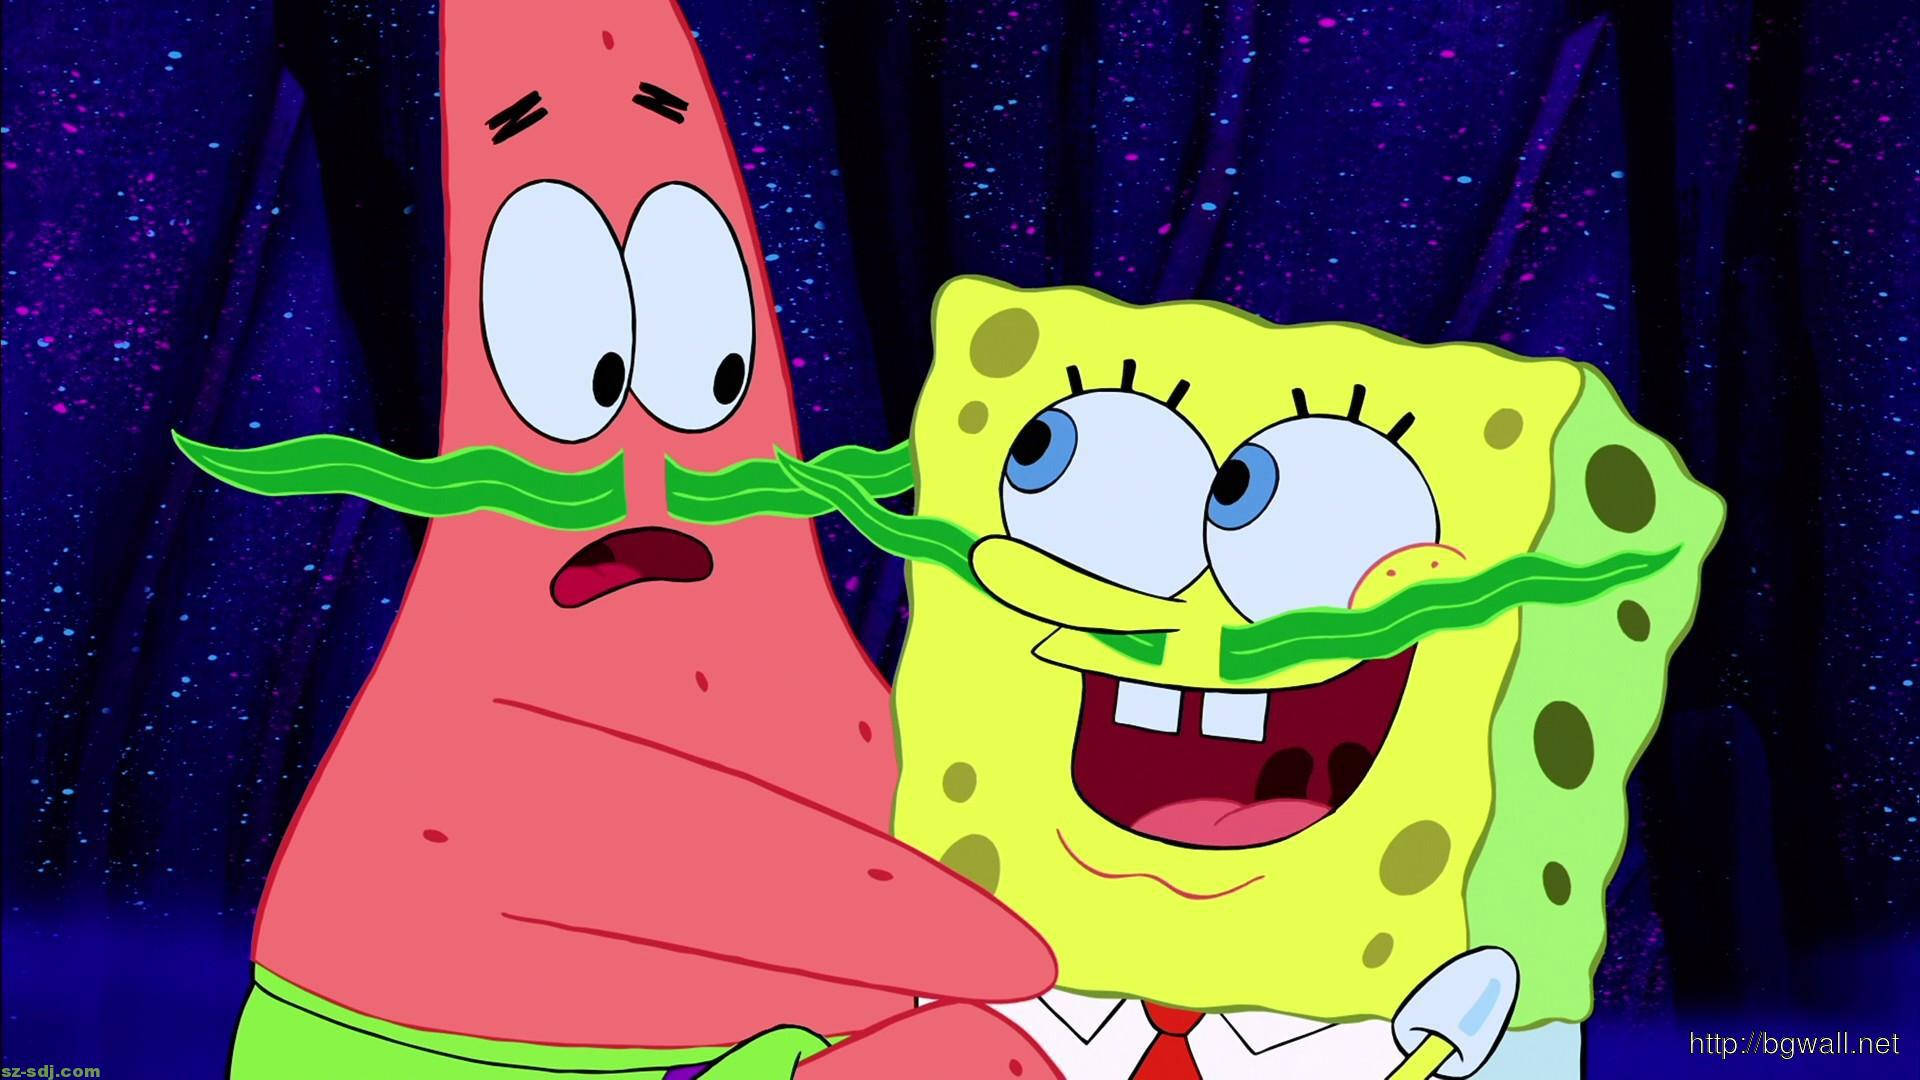 Funny Patrick Star And Spongebob